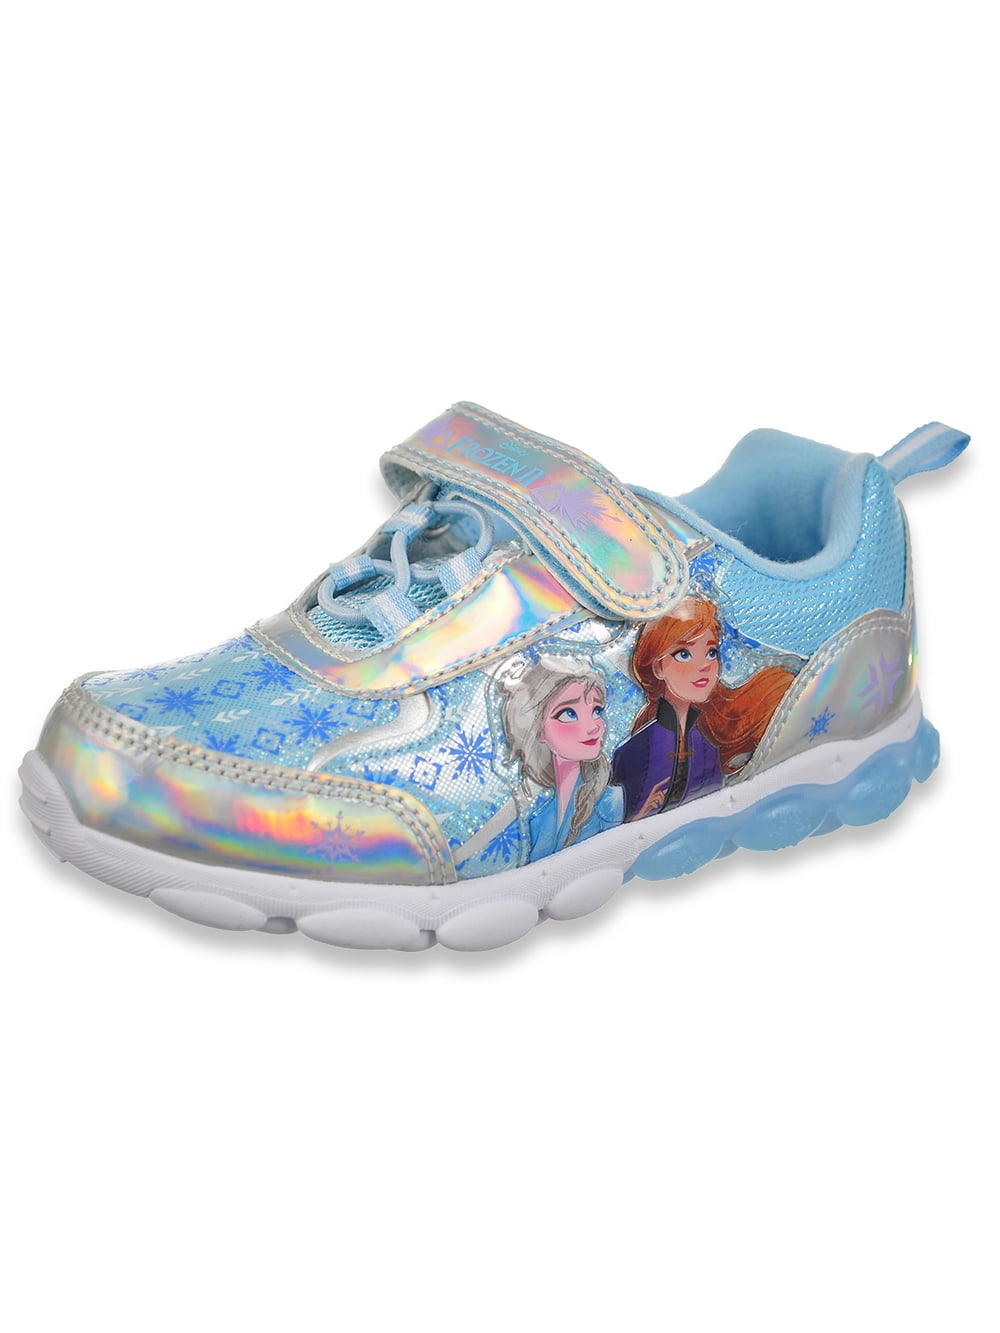 Disney Disney Frozen Girls' LightUp Strap Sneakers